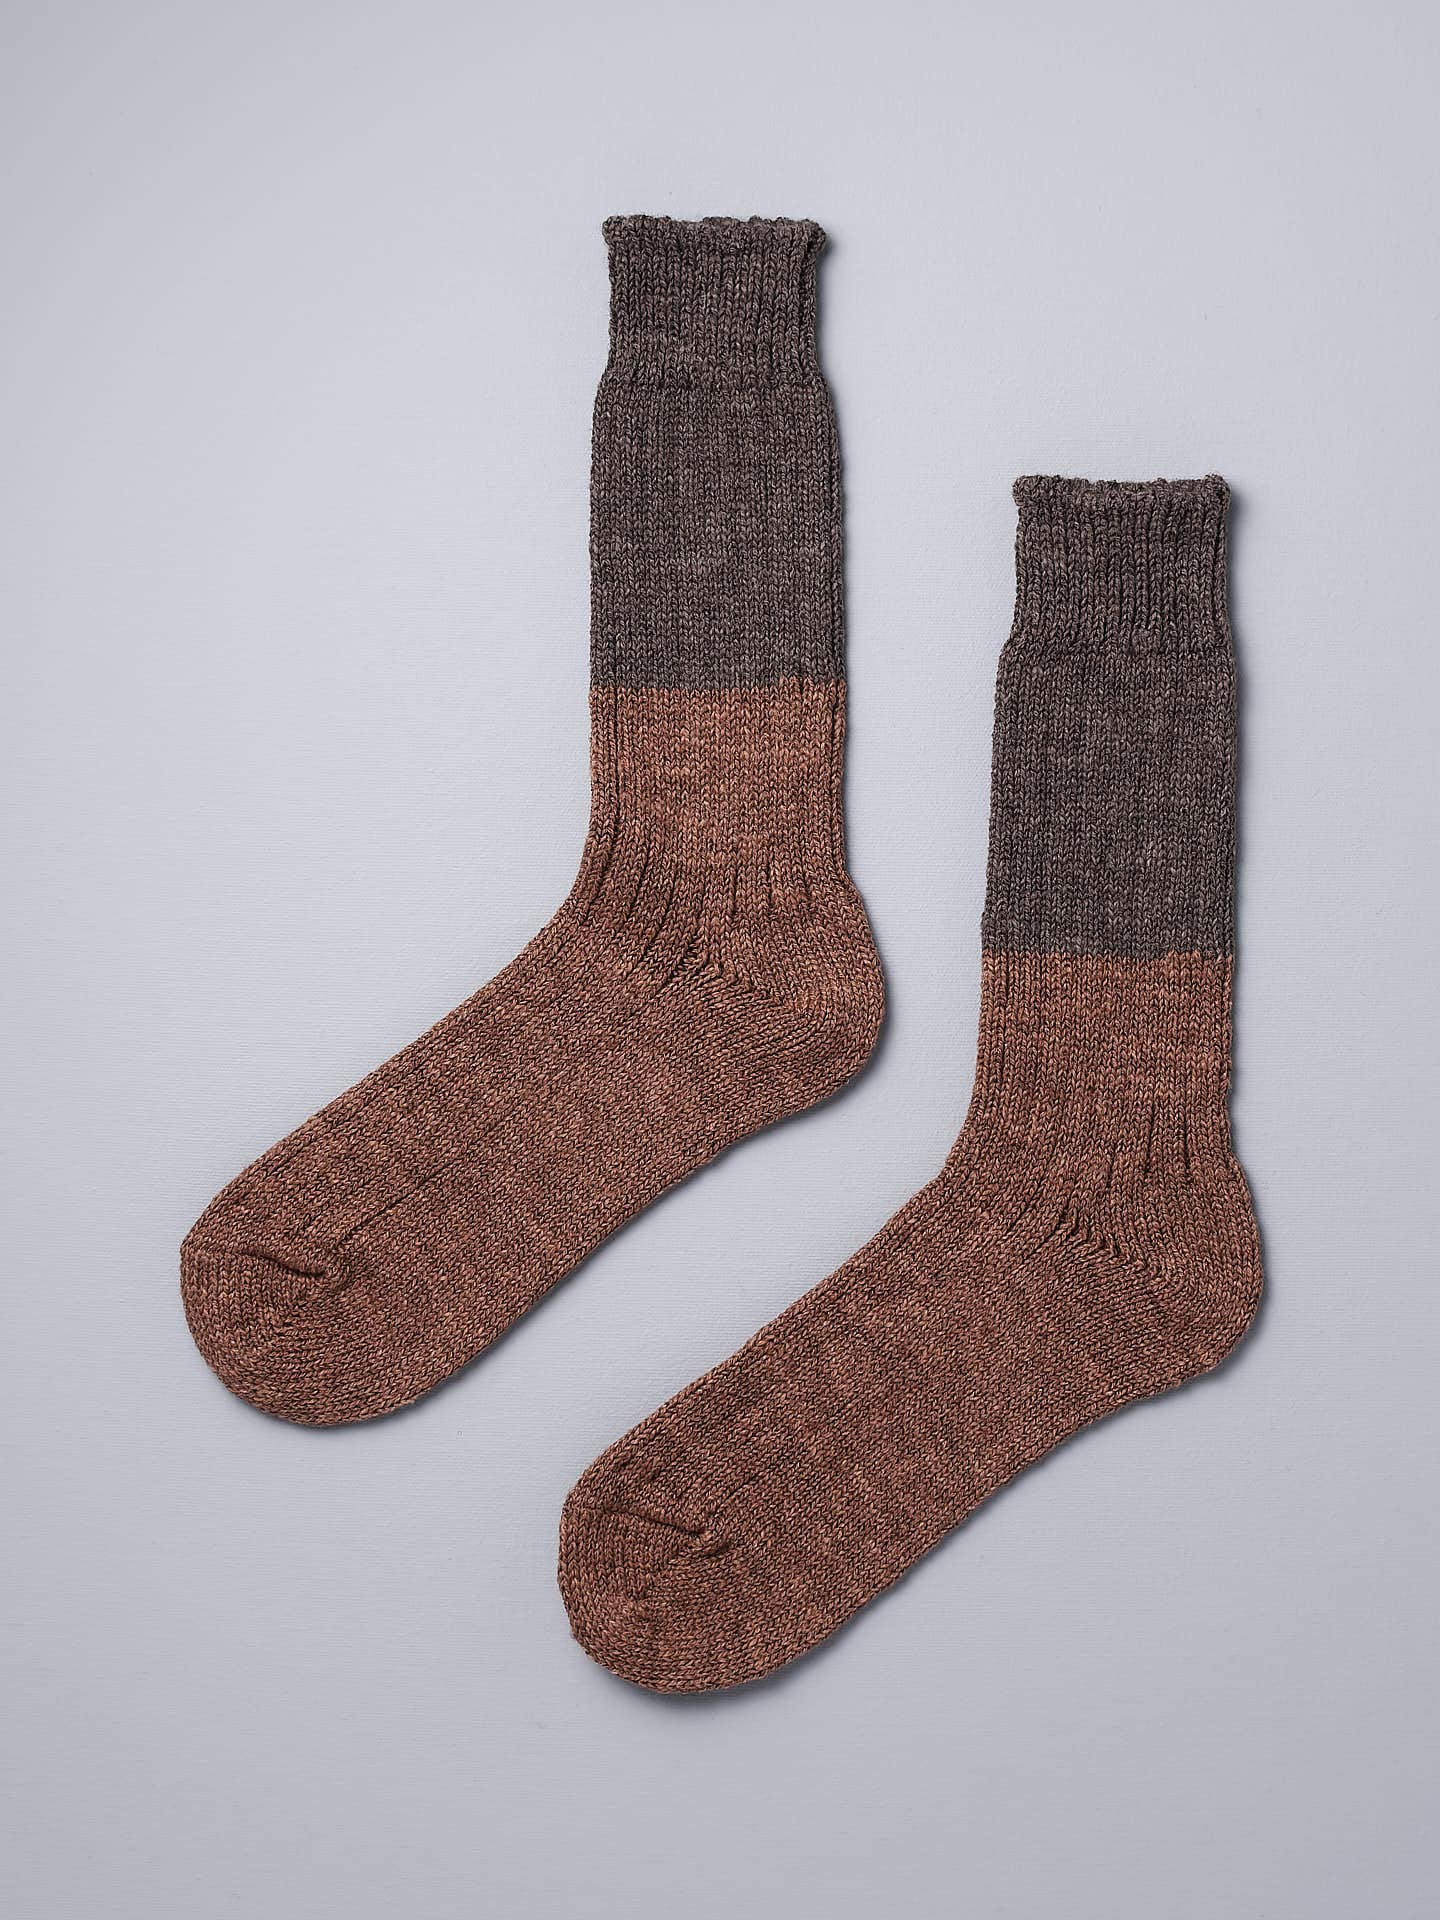 A pair of Boston Slab Socks – Brown Fawn by Nishiguchi Kutsushita on a white background.